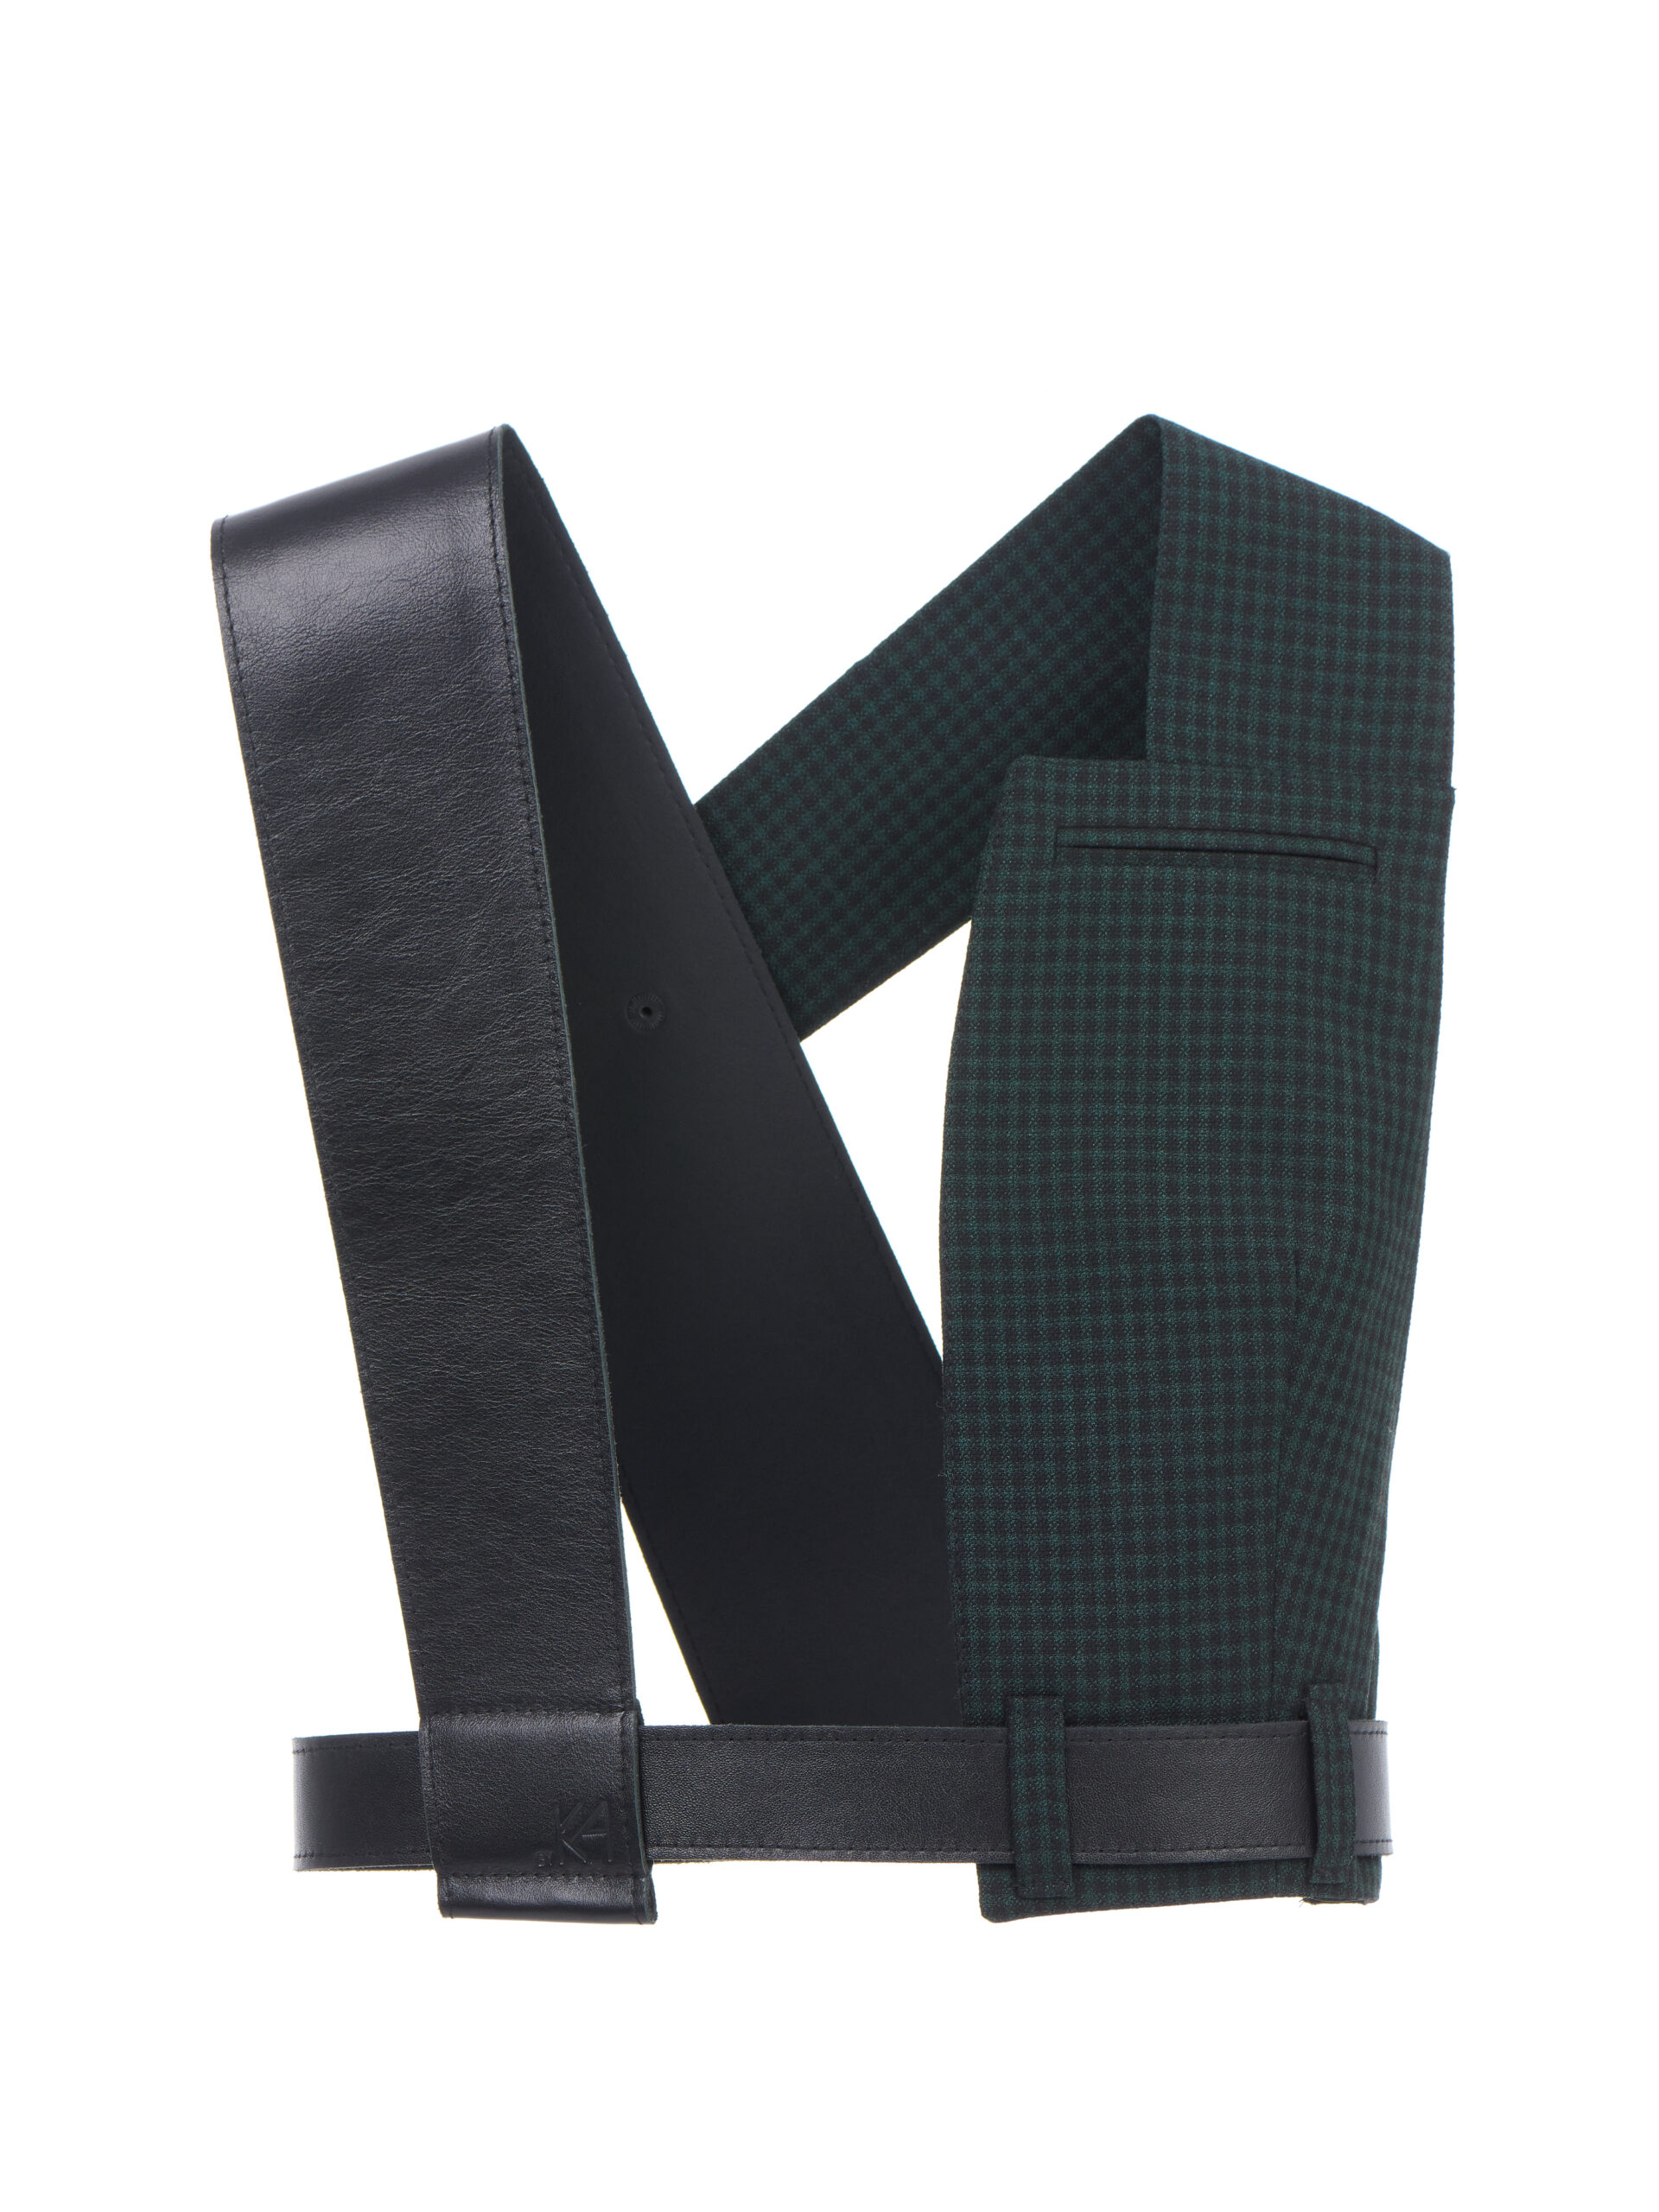 Vest-aksessuaar roheline ruutudega – mustad rihmad / Vest-accessory dark green patterned – black straps